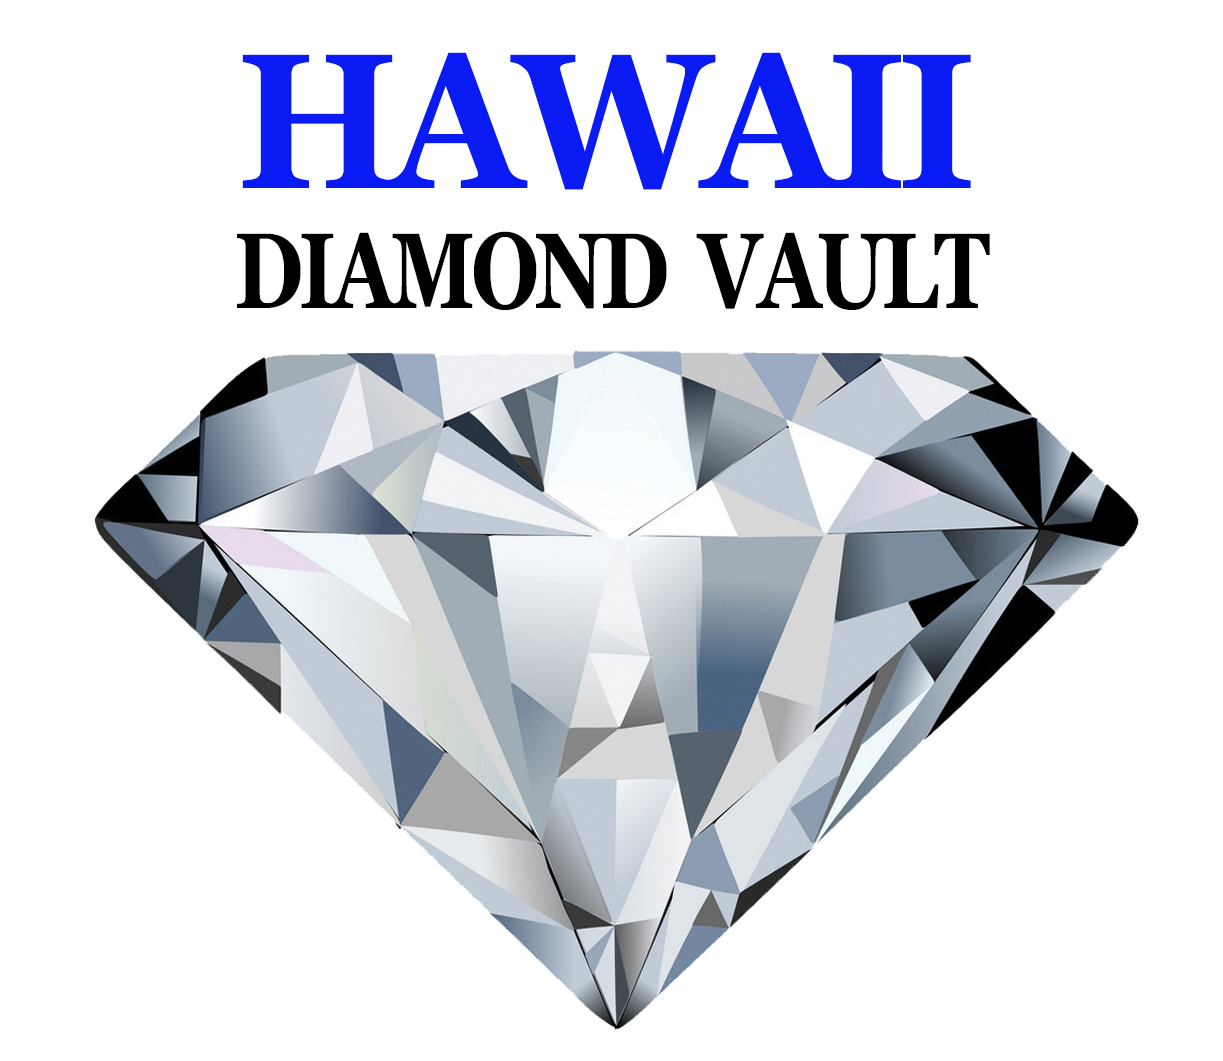 Hawaii Diamond Vault